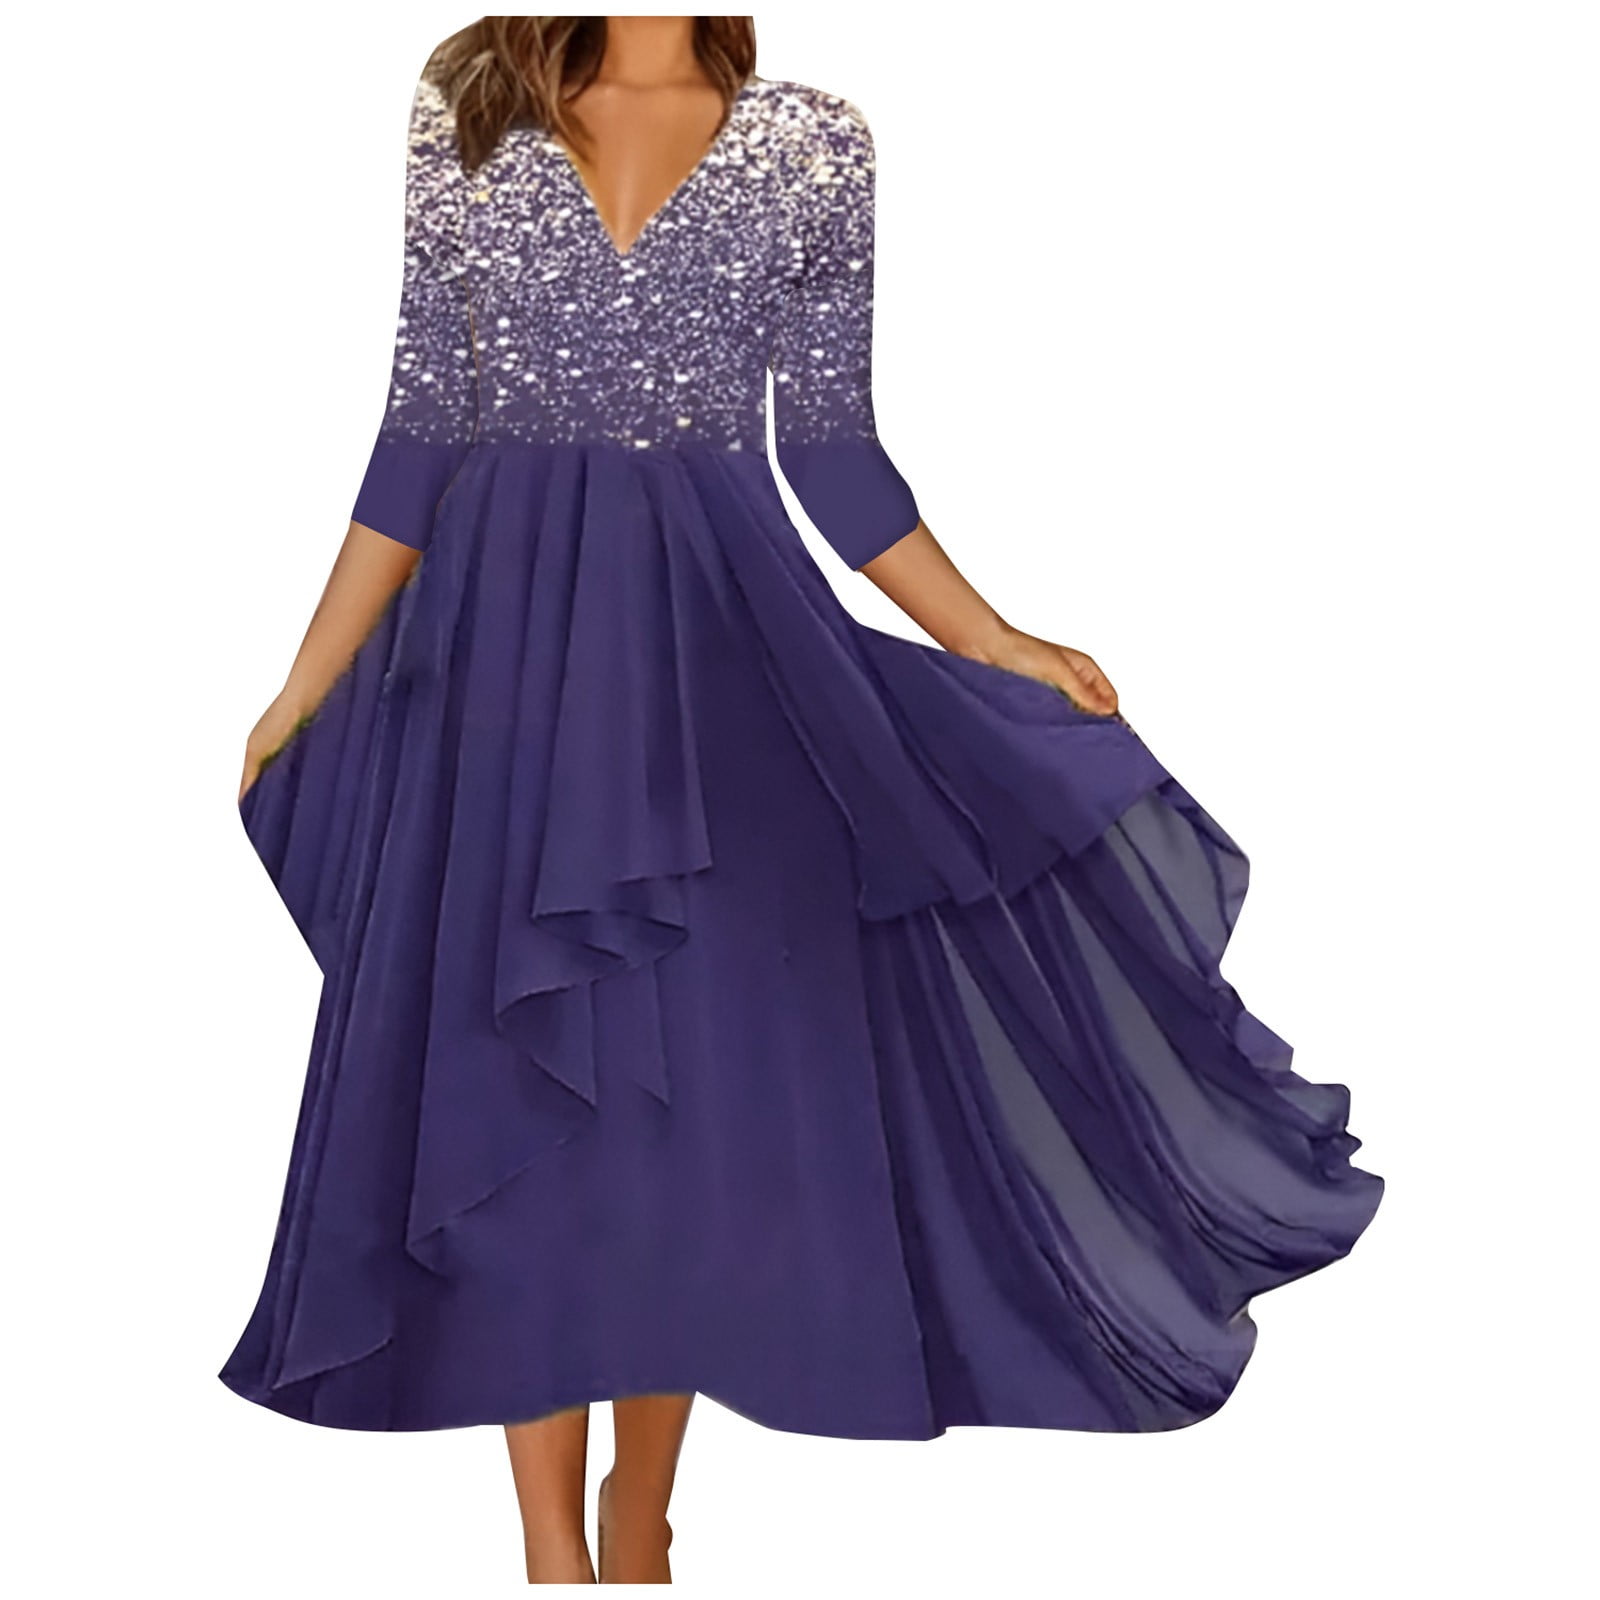 Vintage Lace Dress Dresses For Women Dresses Plus Size Women Cami Dress Purple Dress Shirt For Women Cocktail Dresses For Tube Top Dress Swing Dress Plus Size 1860S Dress -